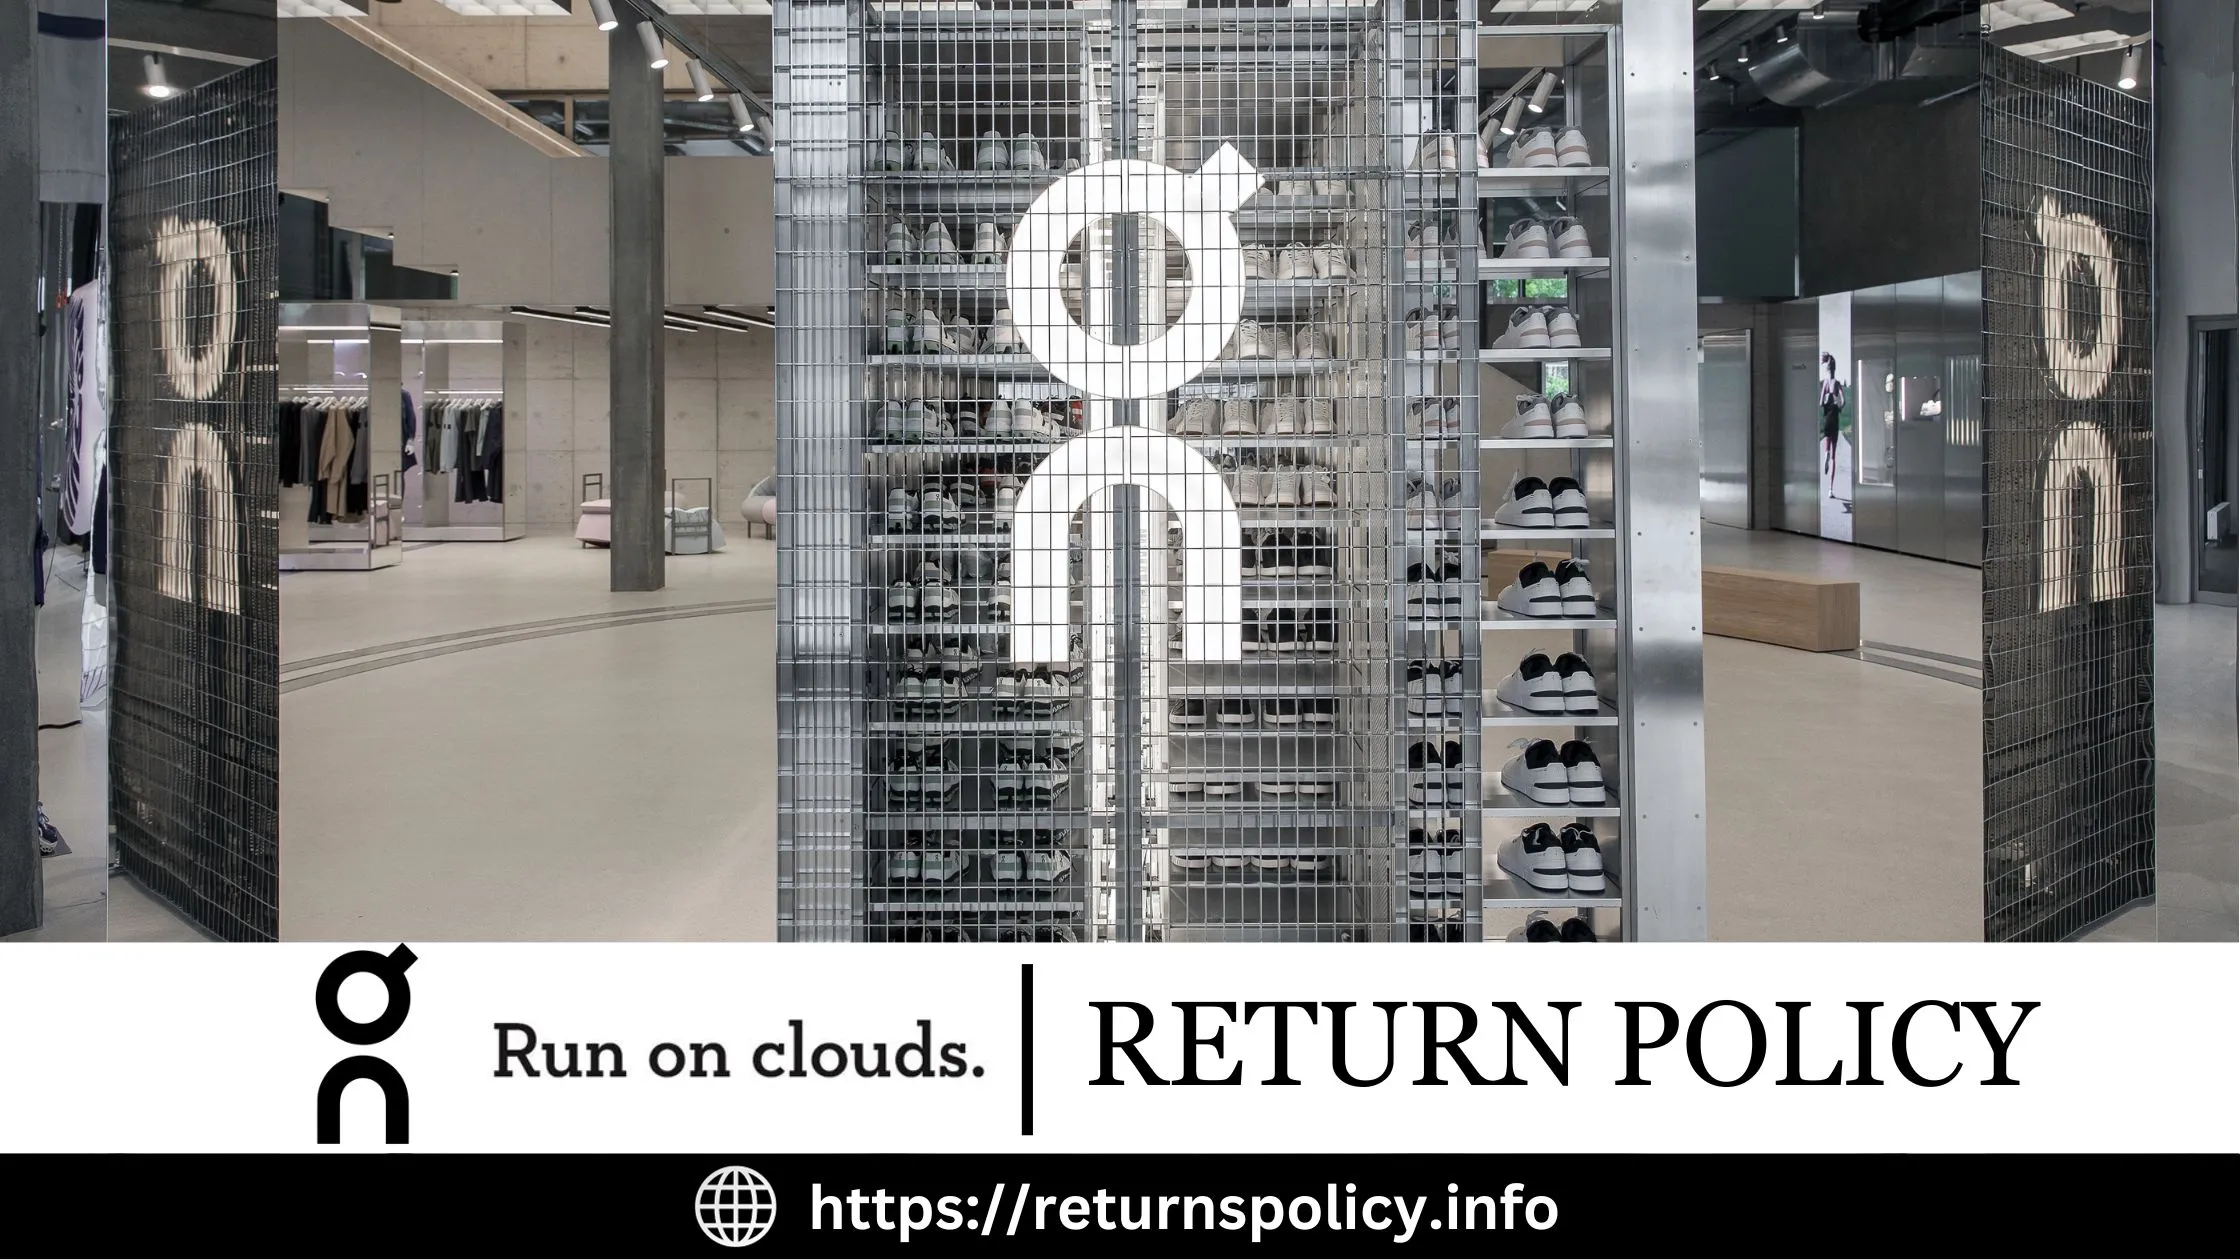 On Cloud Return Policy